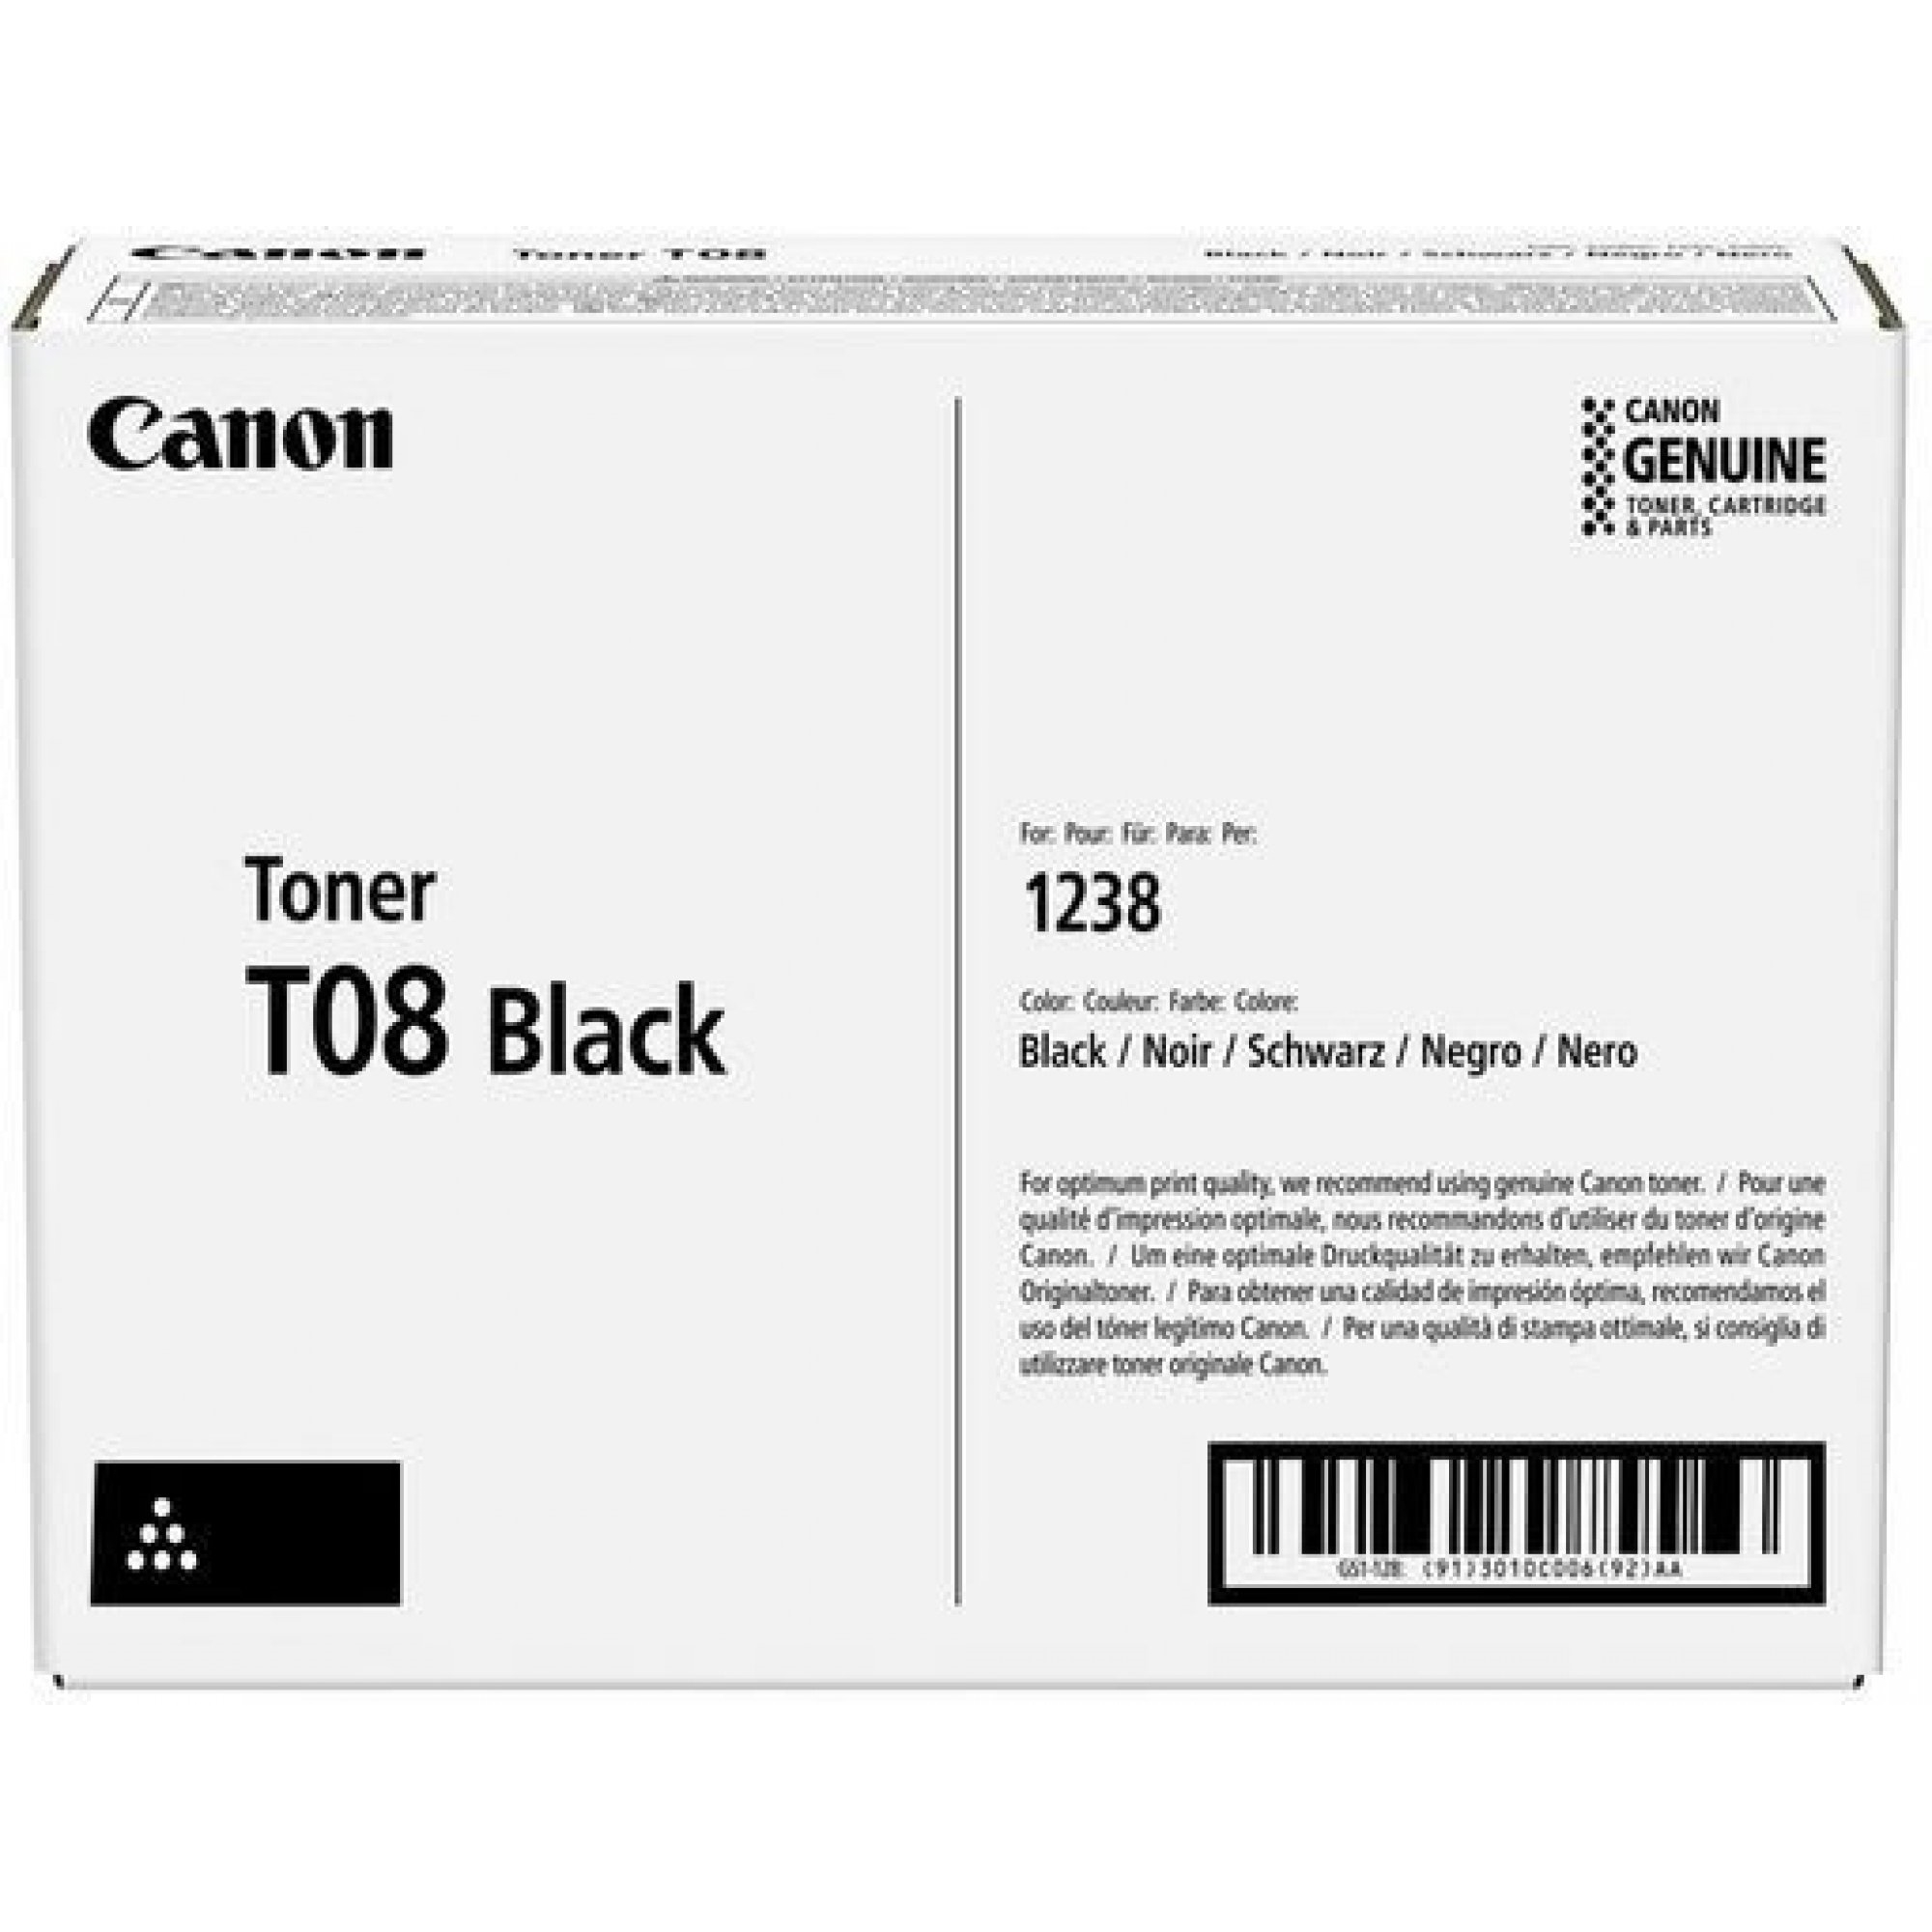 Toner Canon T08, i-SENSYS X 1238P, black, 3010C006, originál